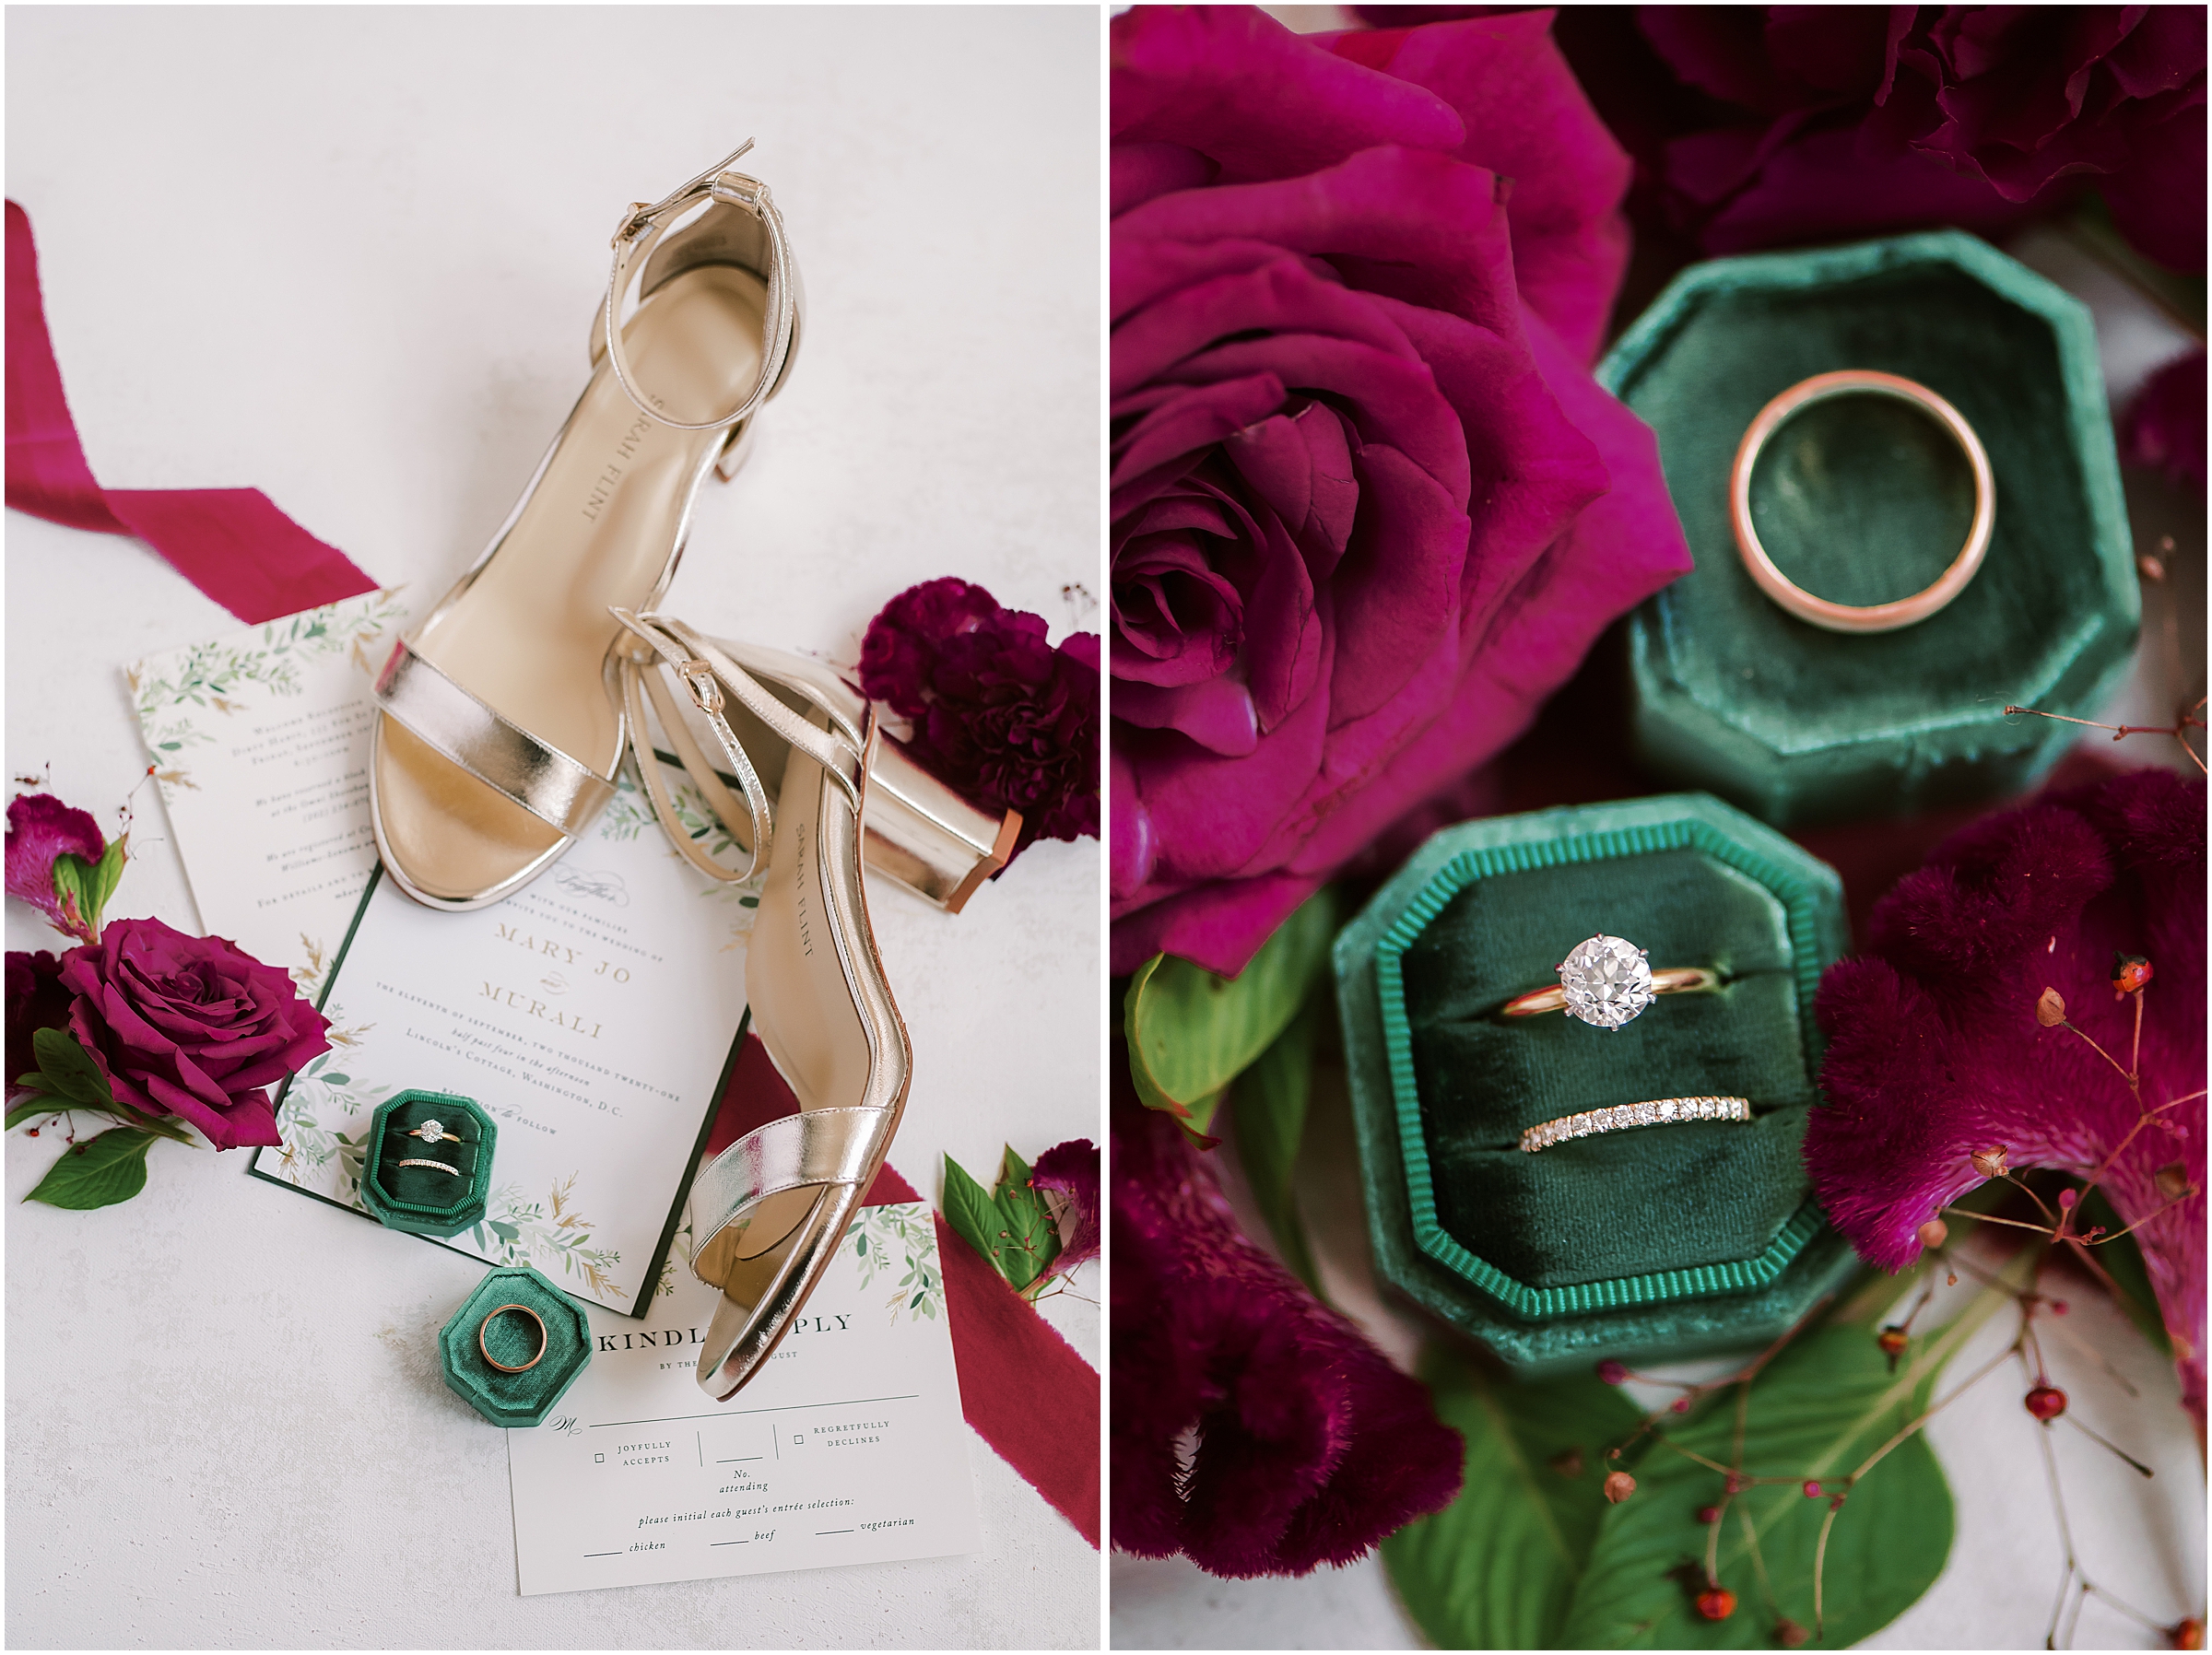 Jewel-toned wedding details